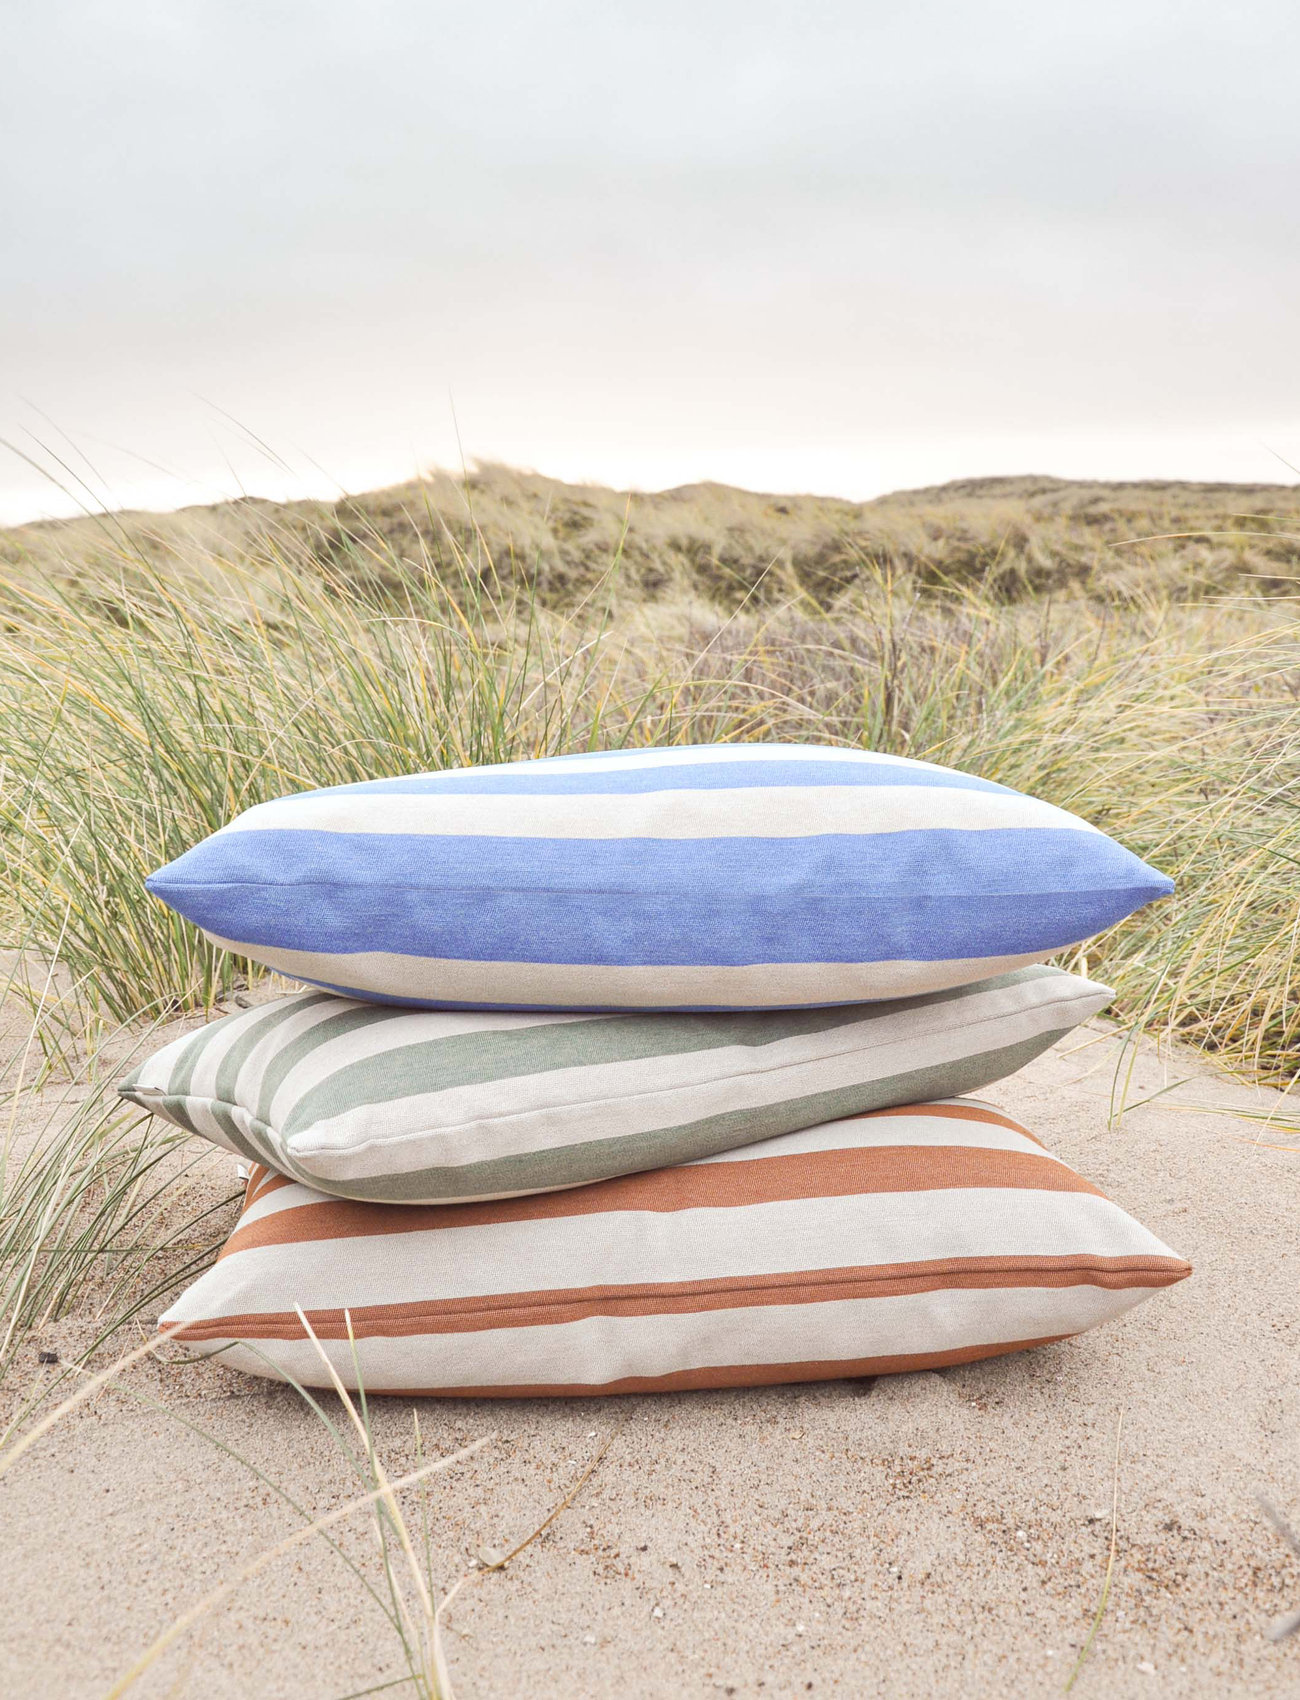 compliments - Outdoor Stripe Cushion - cushions - blue - 1